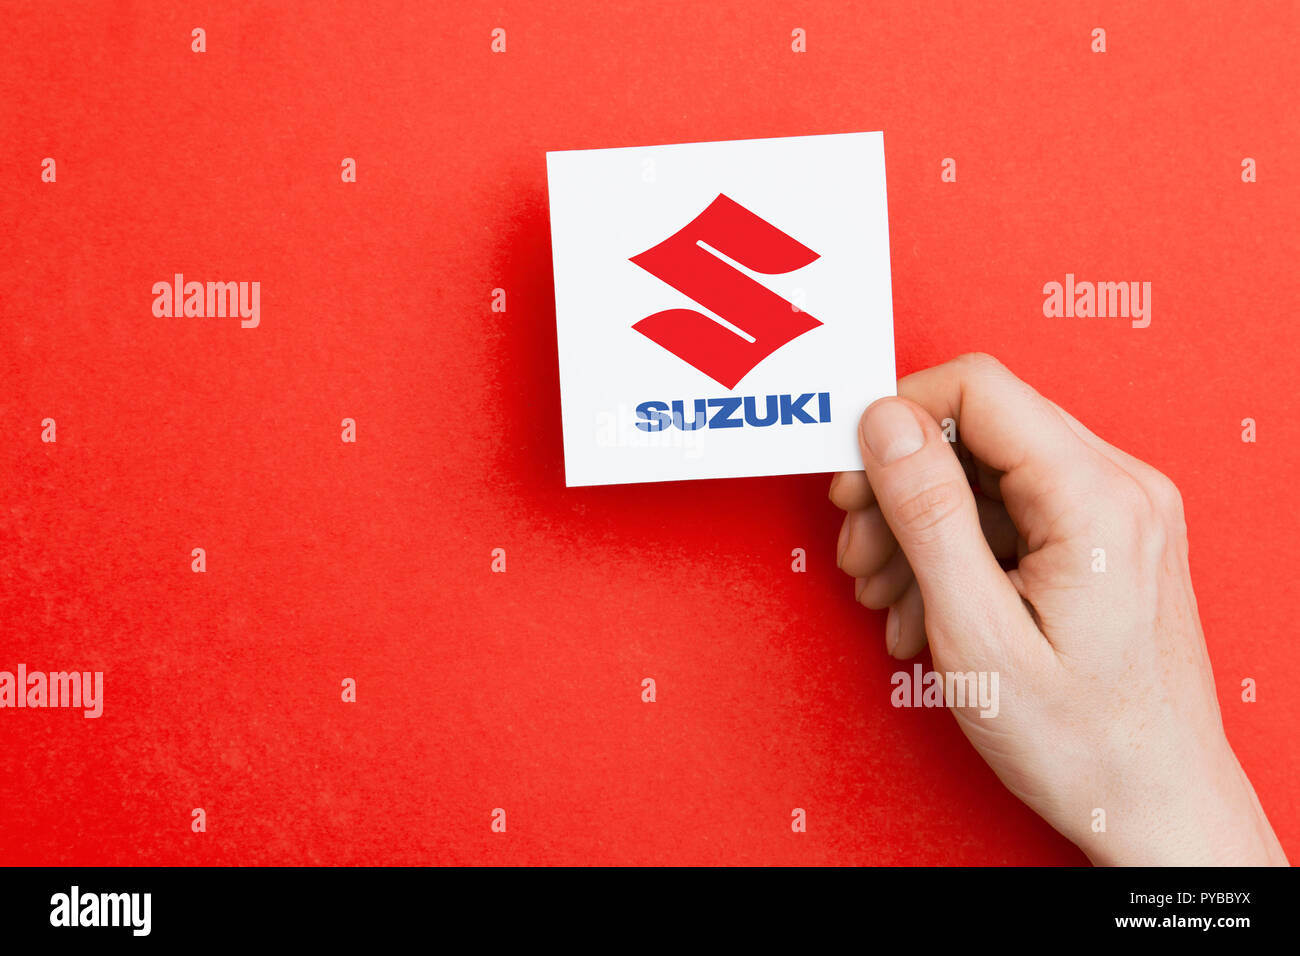 LONDON, UK - October 26th 2018: Hand holding a Suzuki logo. Suzuki is an automobile manufacturer. Stock Photo